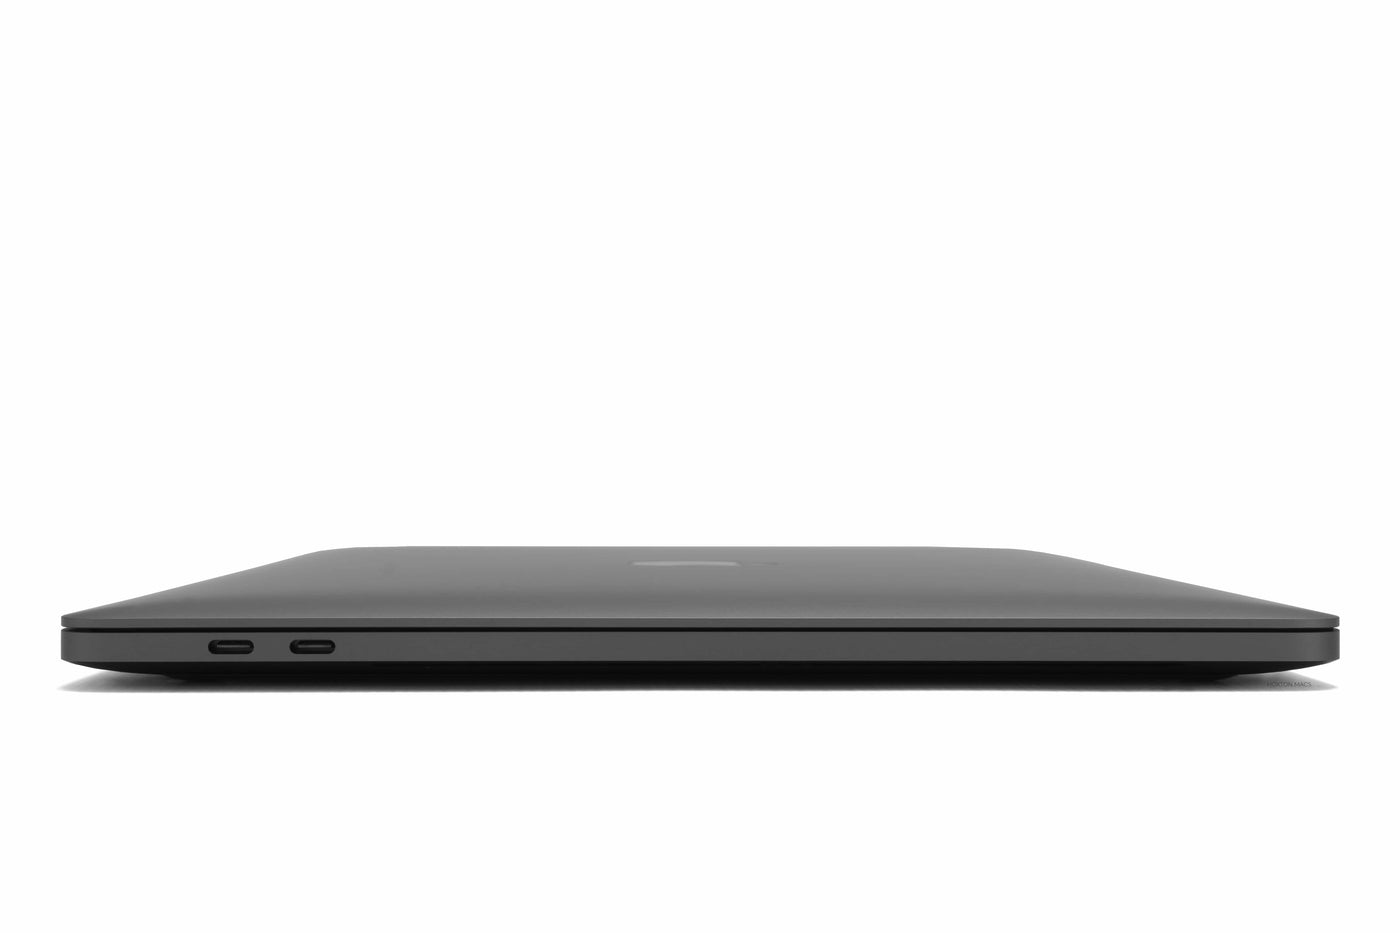 Apple MacBook Pro 13-inch MacBook Pro 13-inch Core i7 2.8GHz (Space Grey, 2019) - Fair